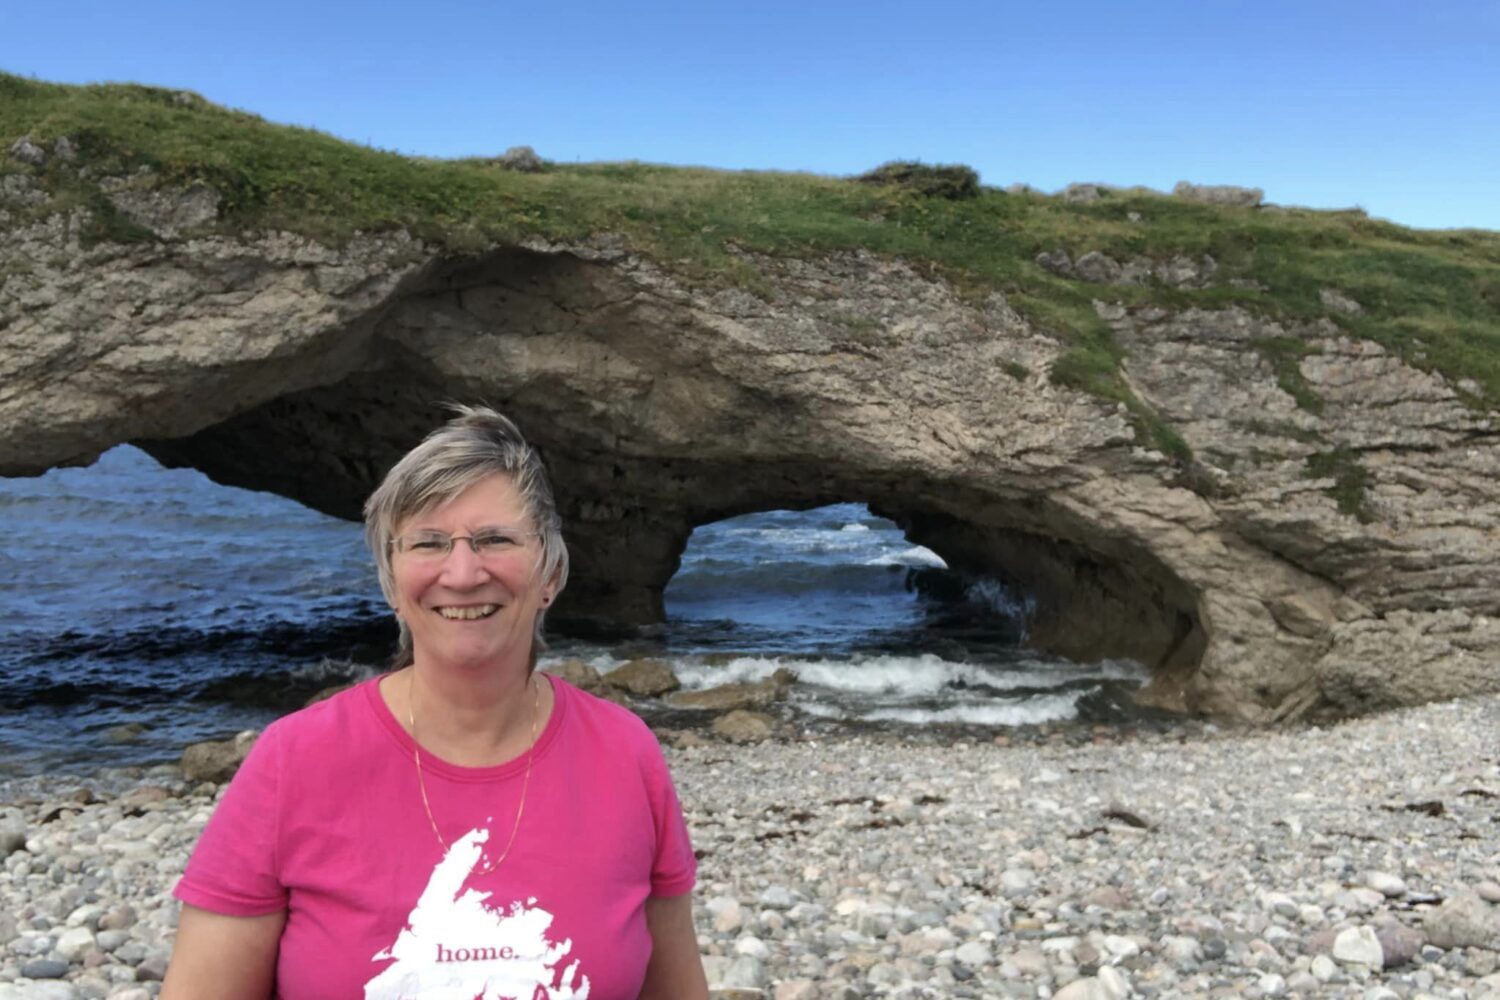 Sheila in Newfoundland - Women Over 50 Tours Newfoundland